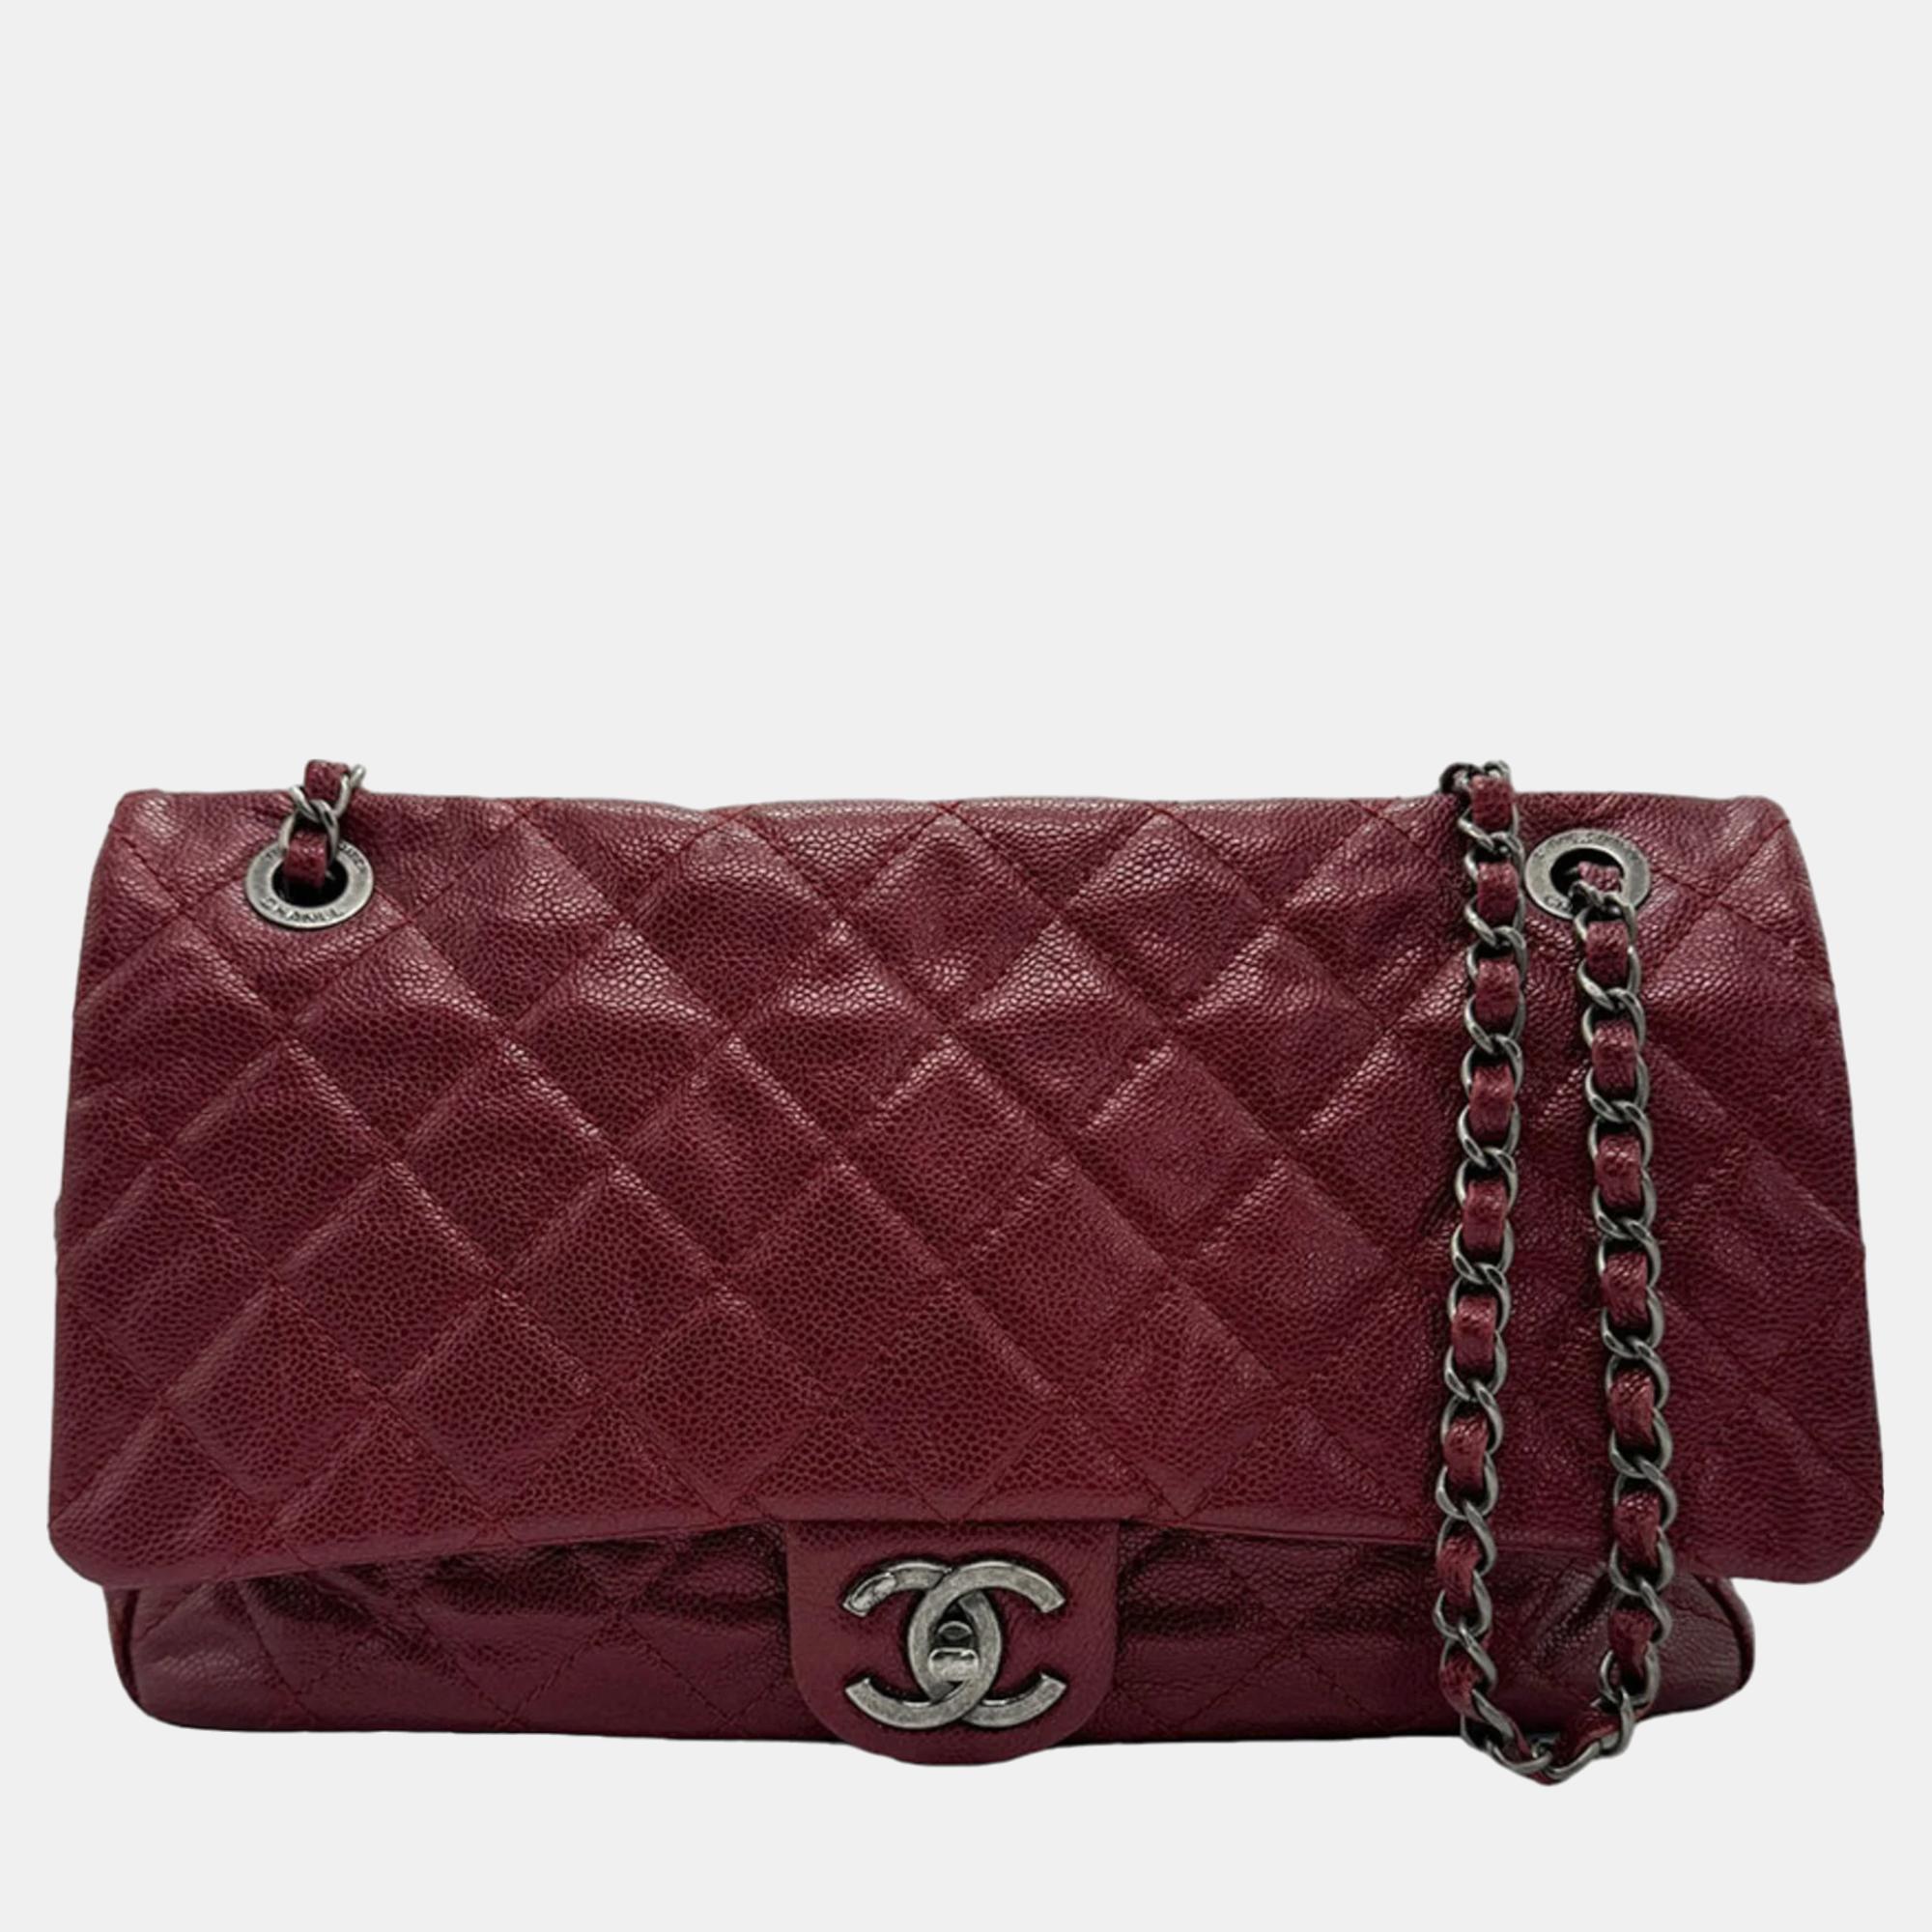 Chanel dark red caviar leather cc  easy shoulder bag